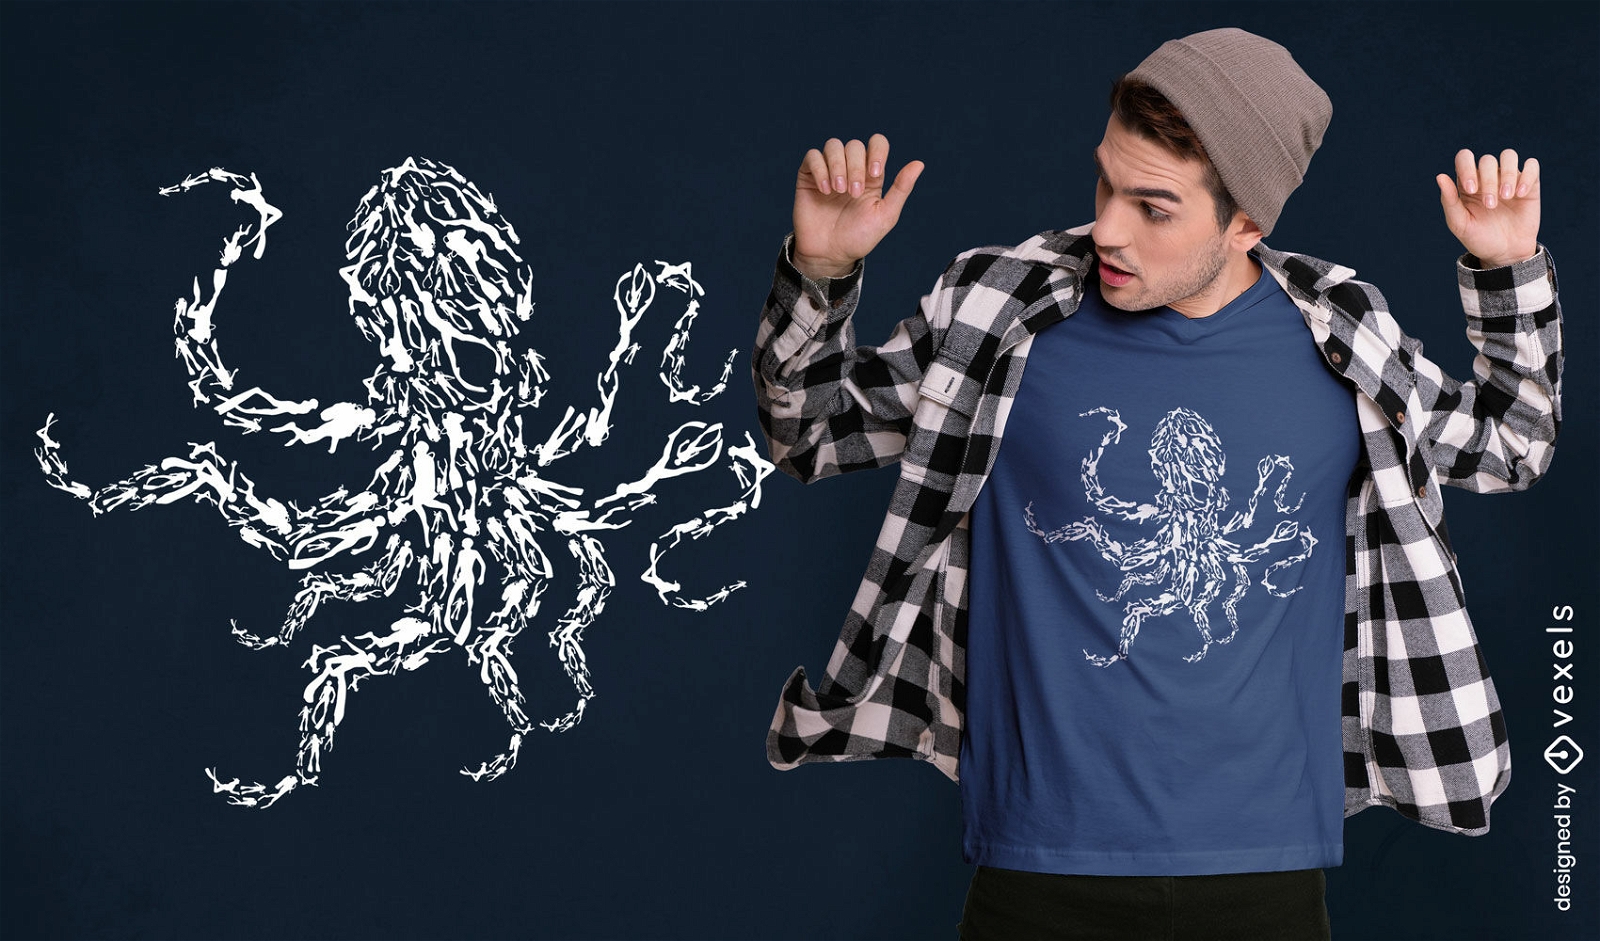 Octopus and scuba divers silhouette t-shirt design